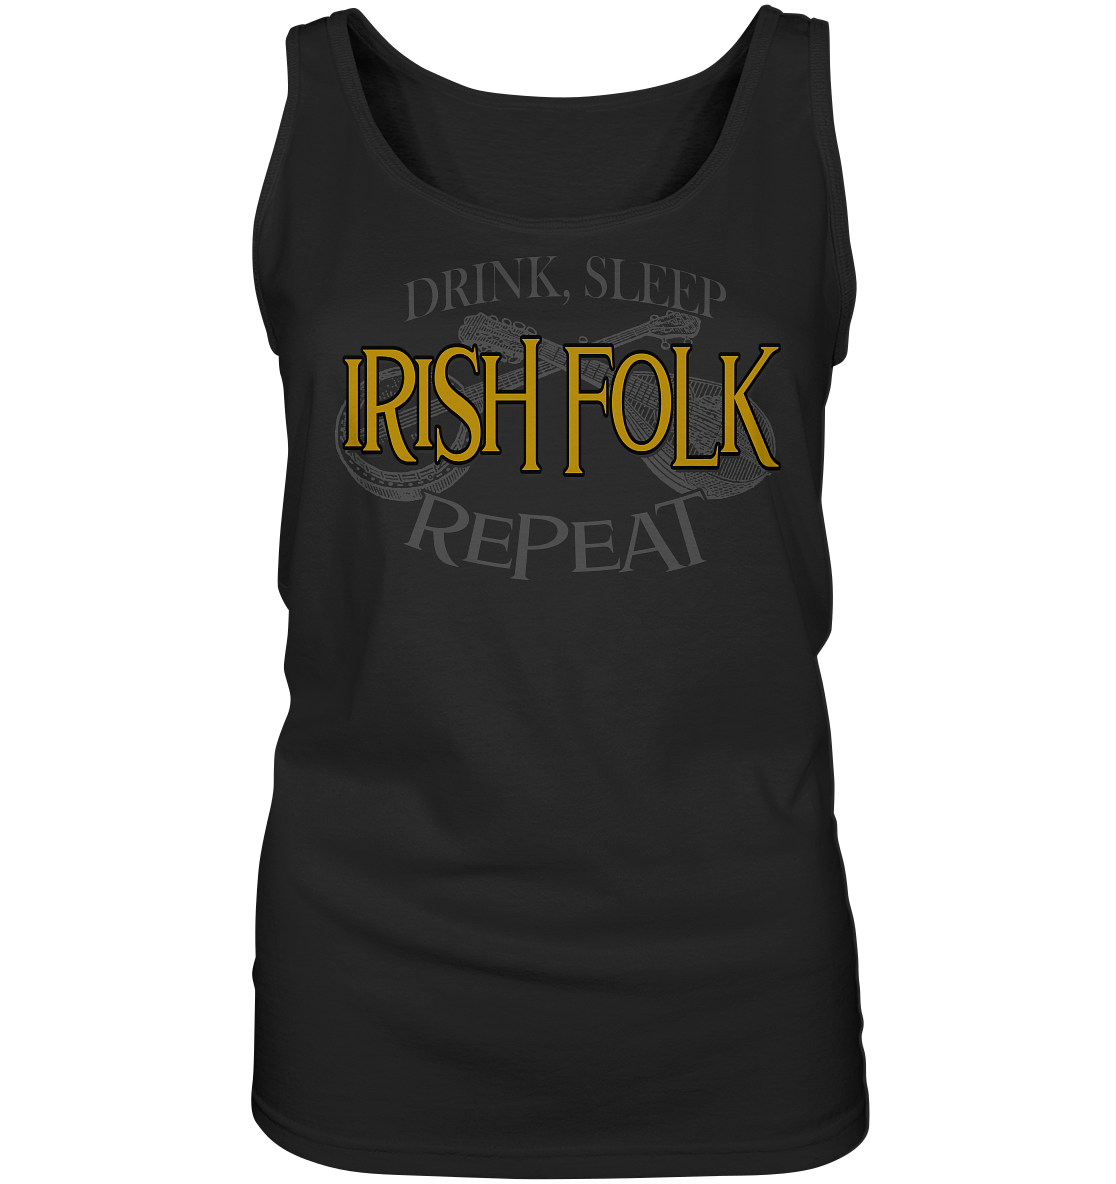 Drink, Sleep "Irish Folk" Repeat - Ladies Tank-Top